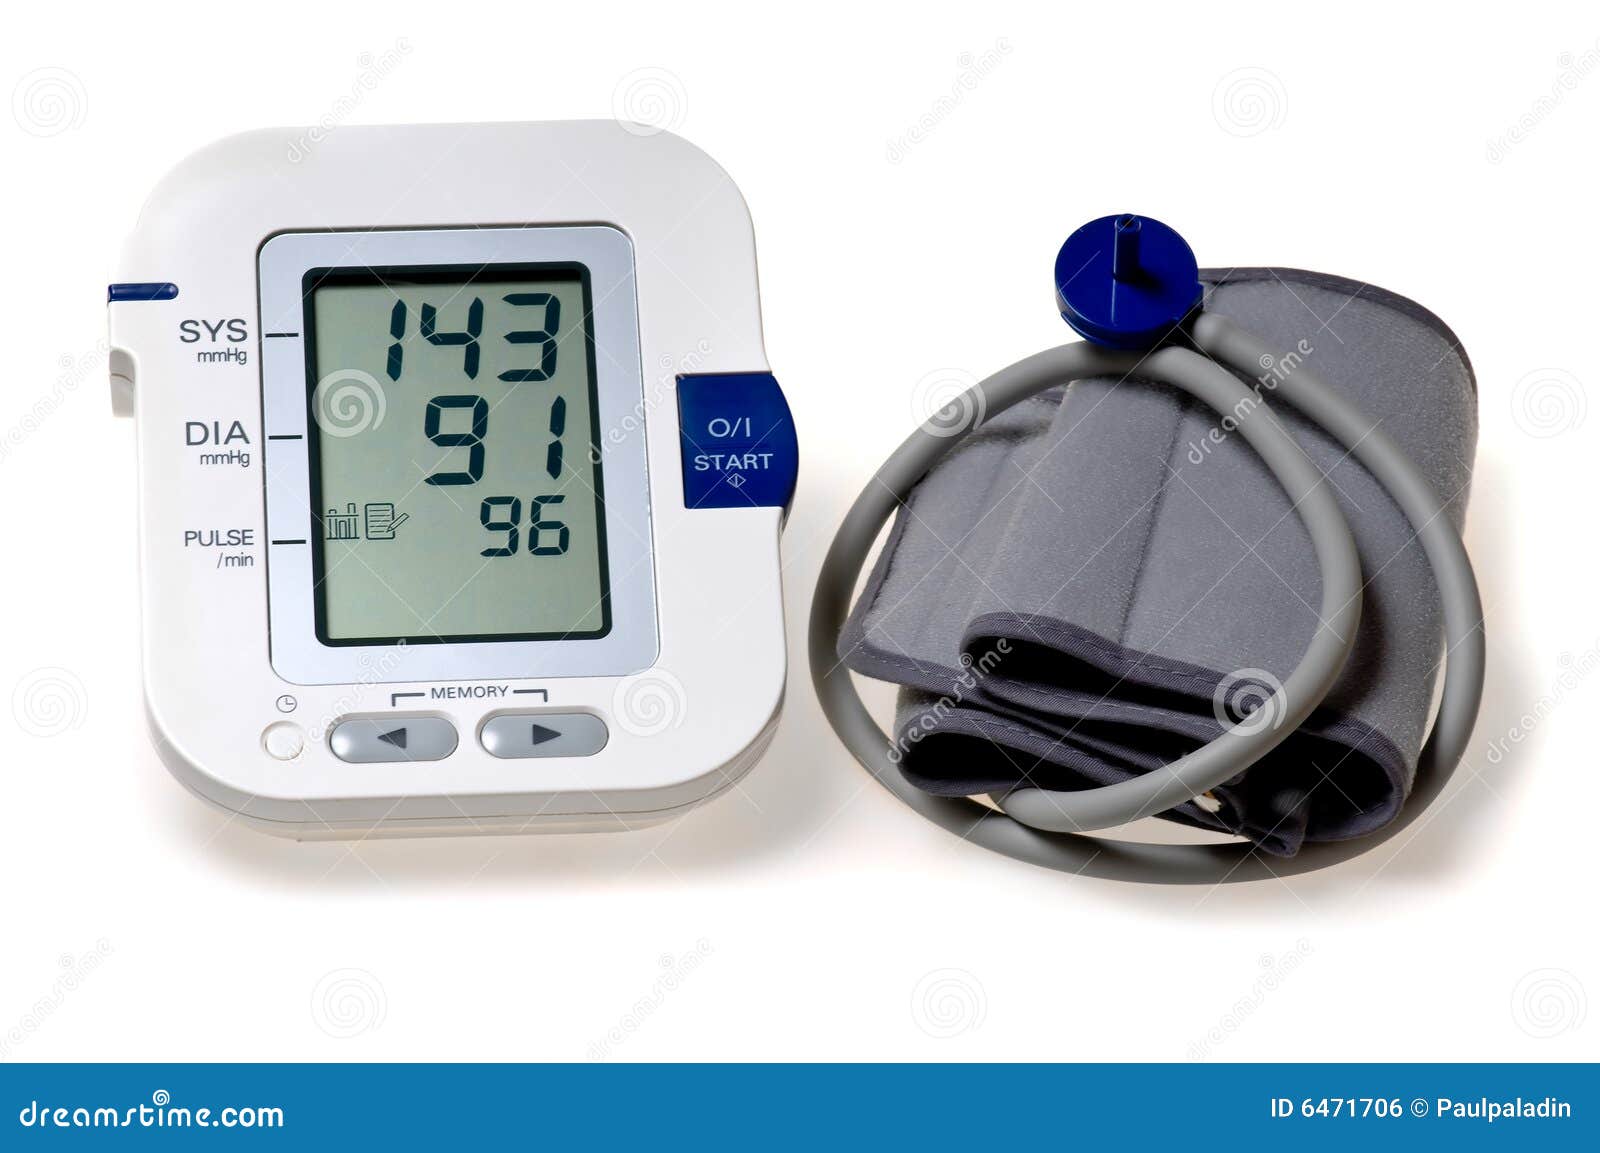 free clipart of blood pressure cuff - photo #41